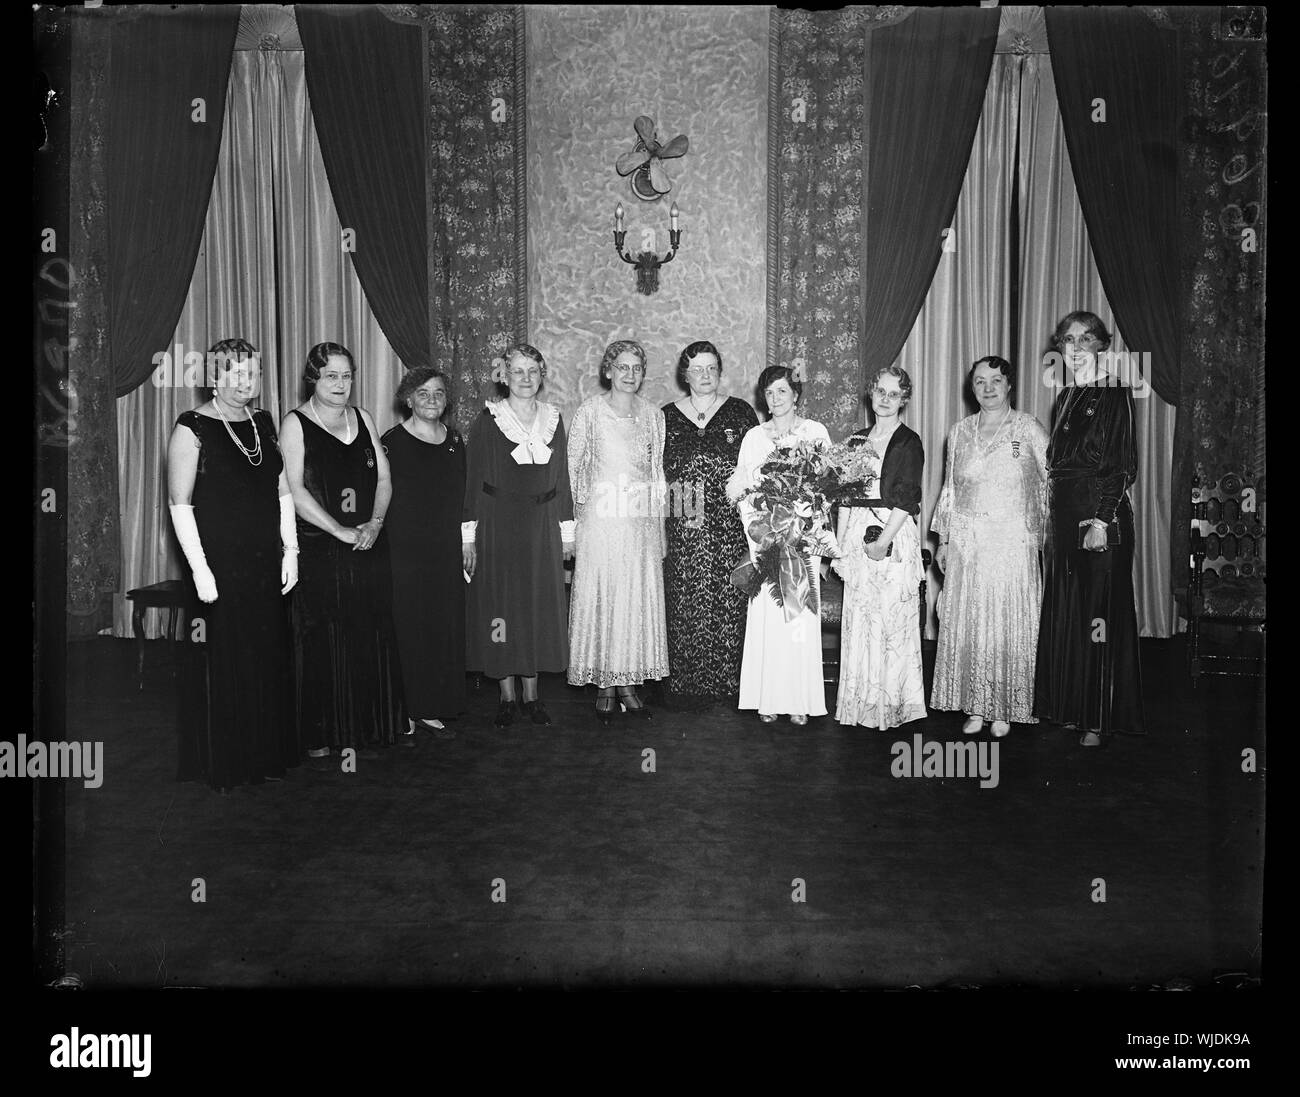 Have led Spanish War auxiliary. Left to right: Mamie B. Schmidt (Ga.), 1933-34; Florence M. Clark (Ohio), 1923-24; Minnie R. Lenhart (Pa.), 1919-20; Violet B. King (Ill.), 1918-19; Elizabeth M. Hartung (Ohio), 1917-18; Olive M. Ravens (Mich.), 1928-29, National Secretary; Anna Nagle (Mass.), National President; Marie C. Williams (Ind.), 1925- 26, National Treasurer; Edyth H. Bird (Ohio), 1930-31; Florence H. Becker (Ky), 1931-32 Stock Photo